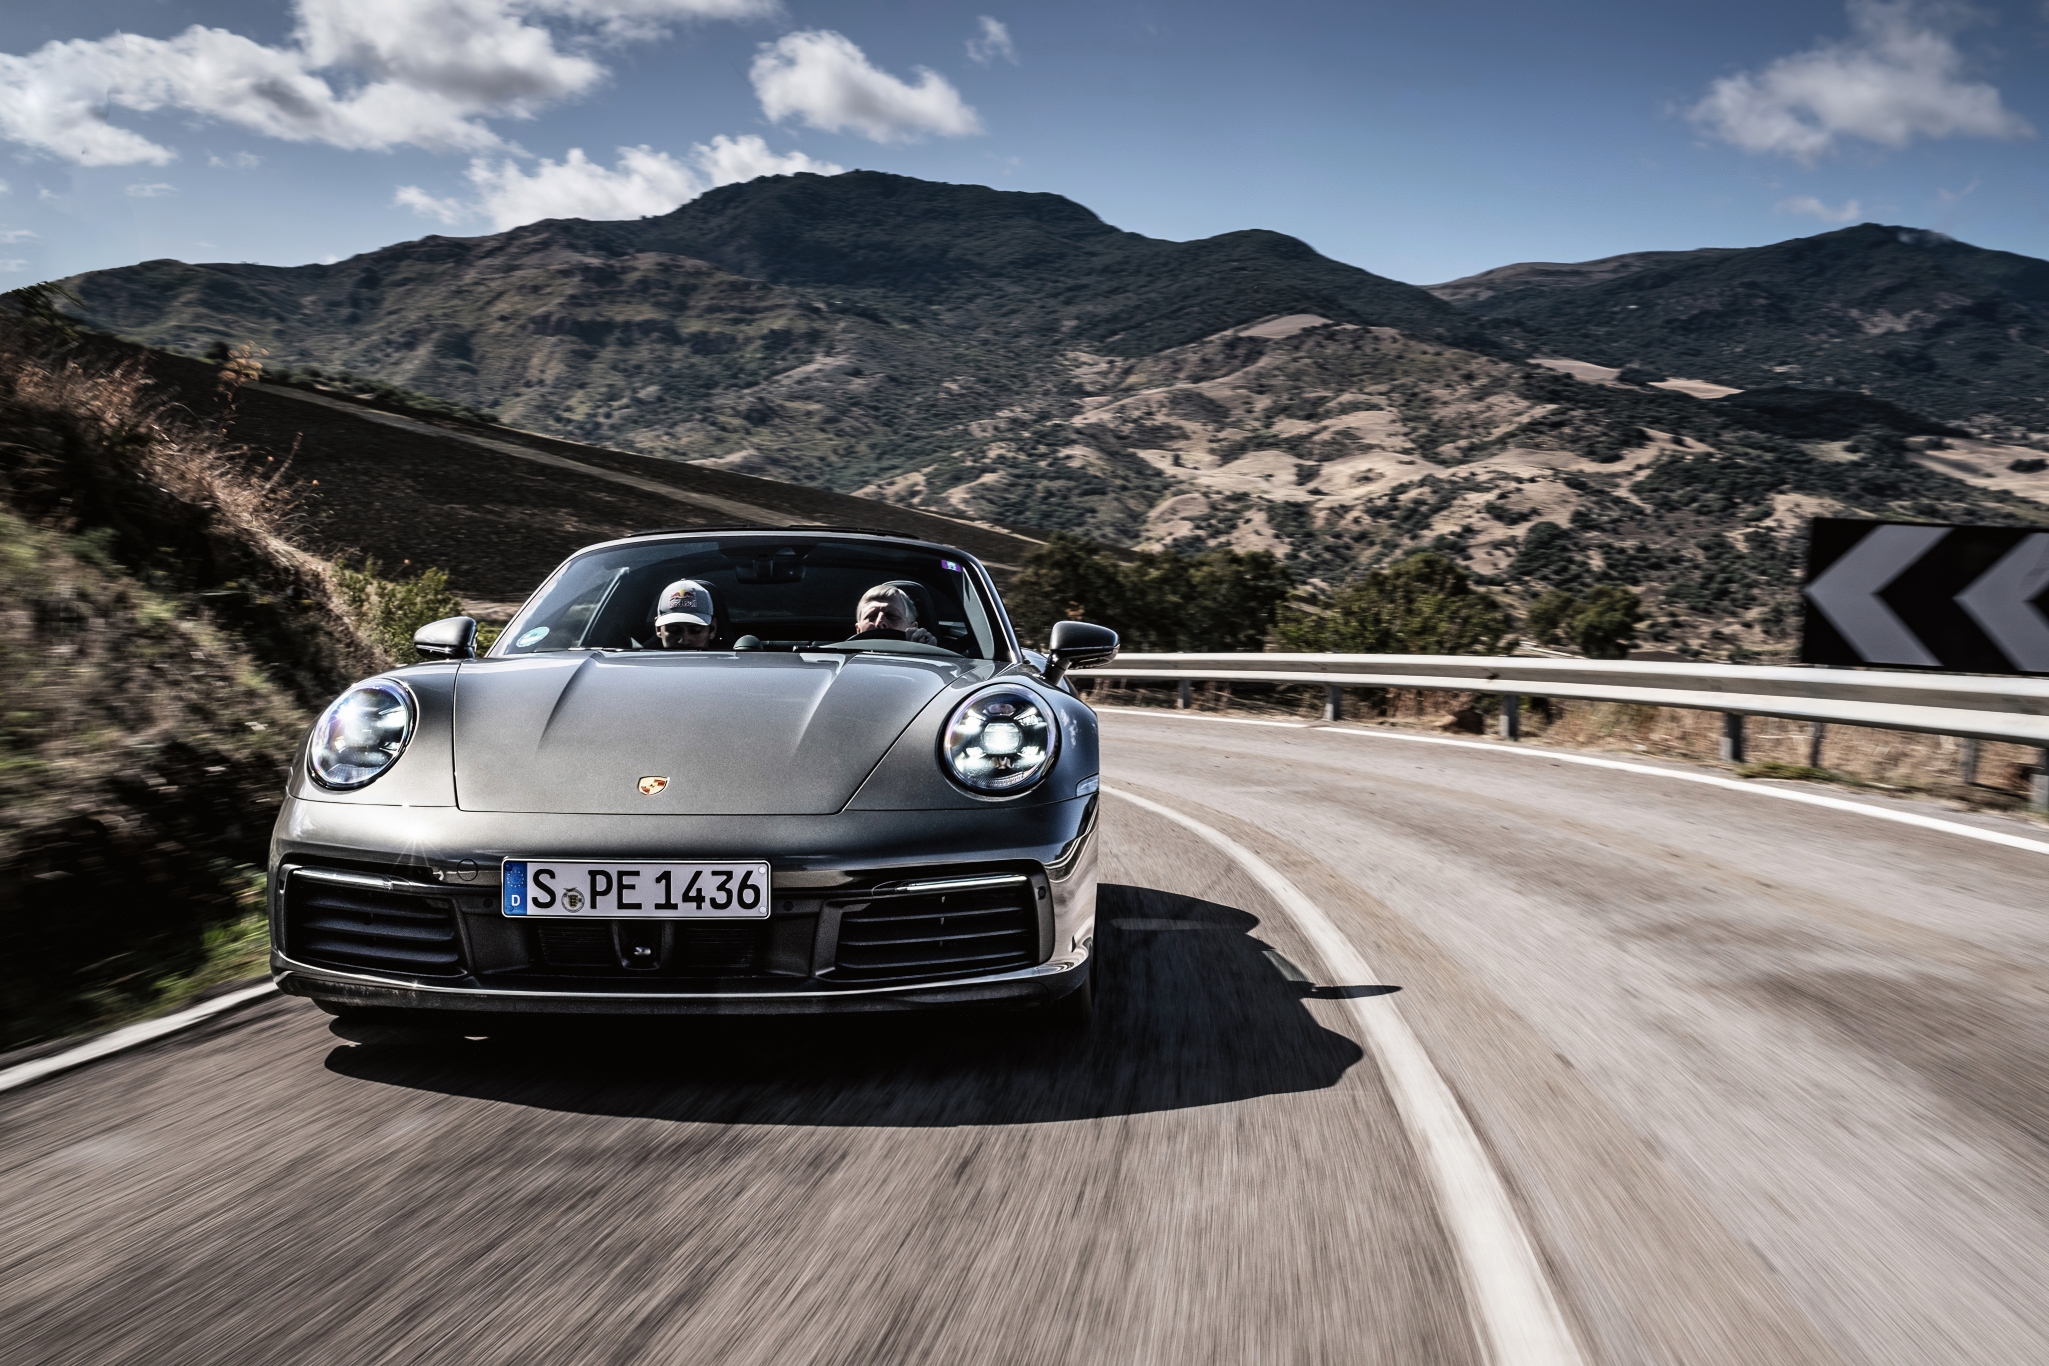 Silver Porsche 911 Targa 4S on road in Sicily